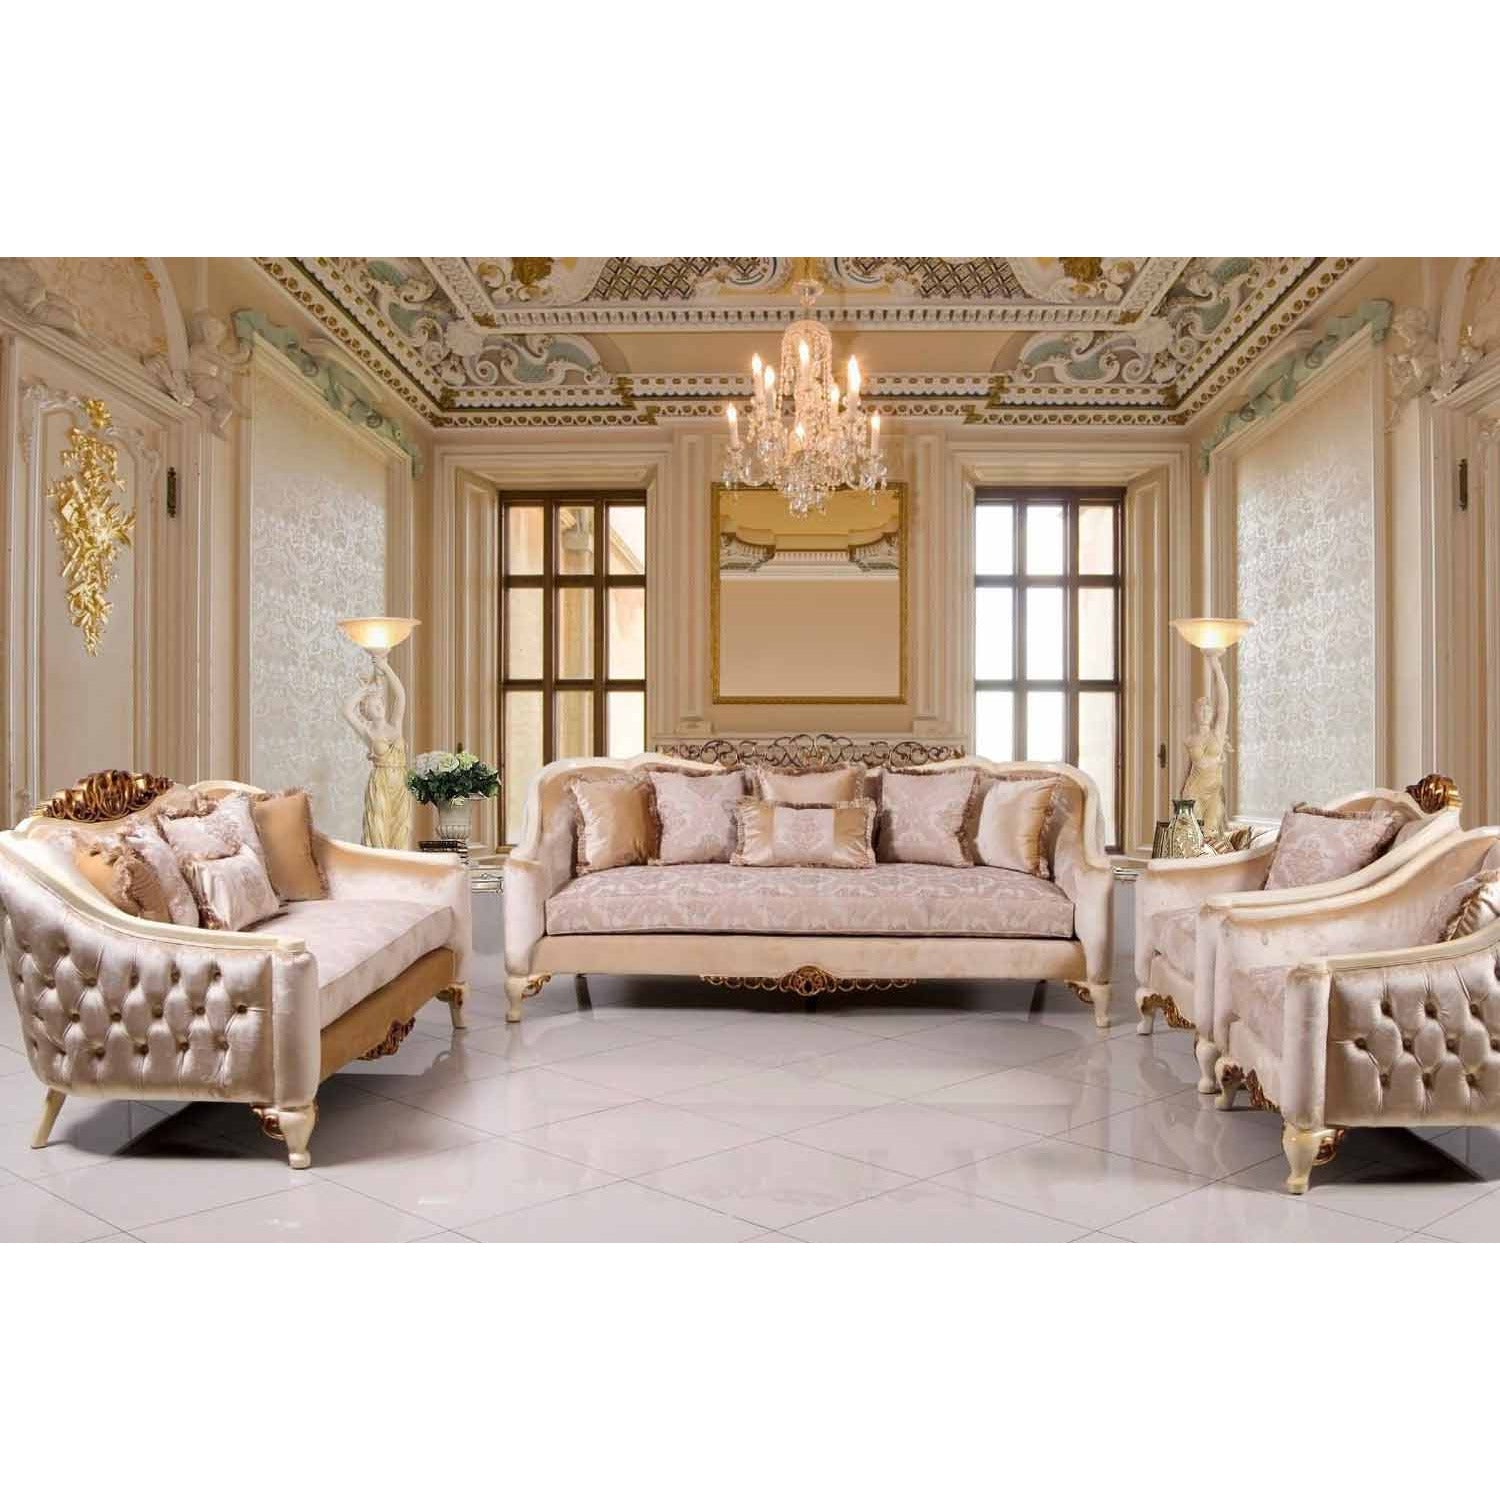 European Furniture - Angelica 3 Piece Living Room Set in Beige & Gold - 45350-3SET - New Star Living